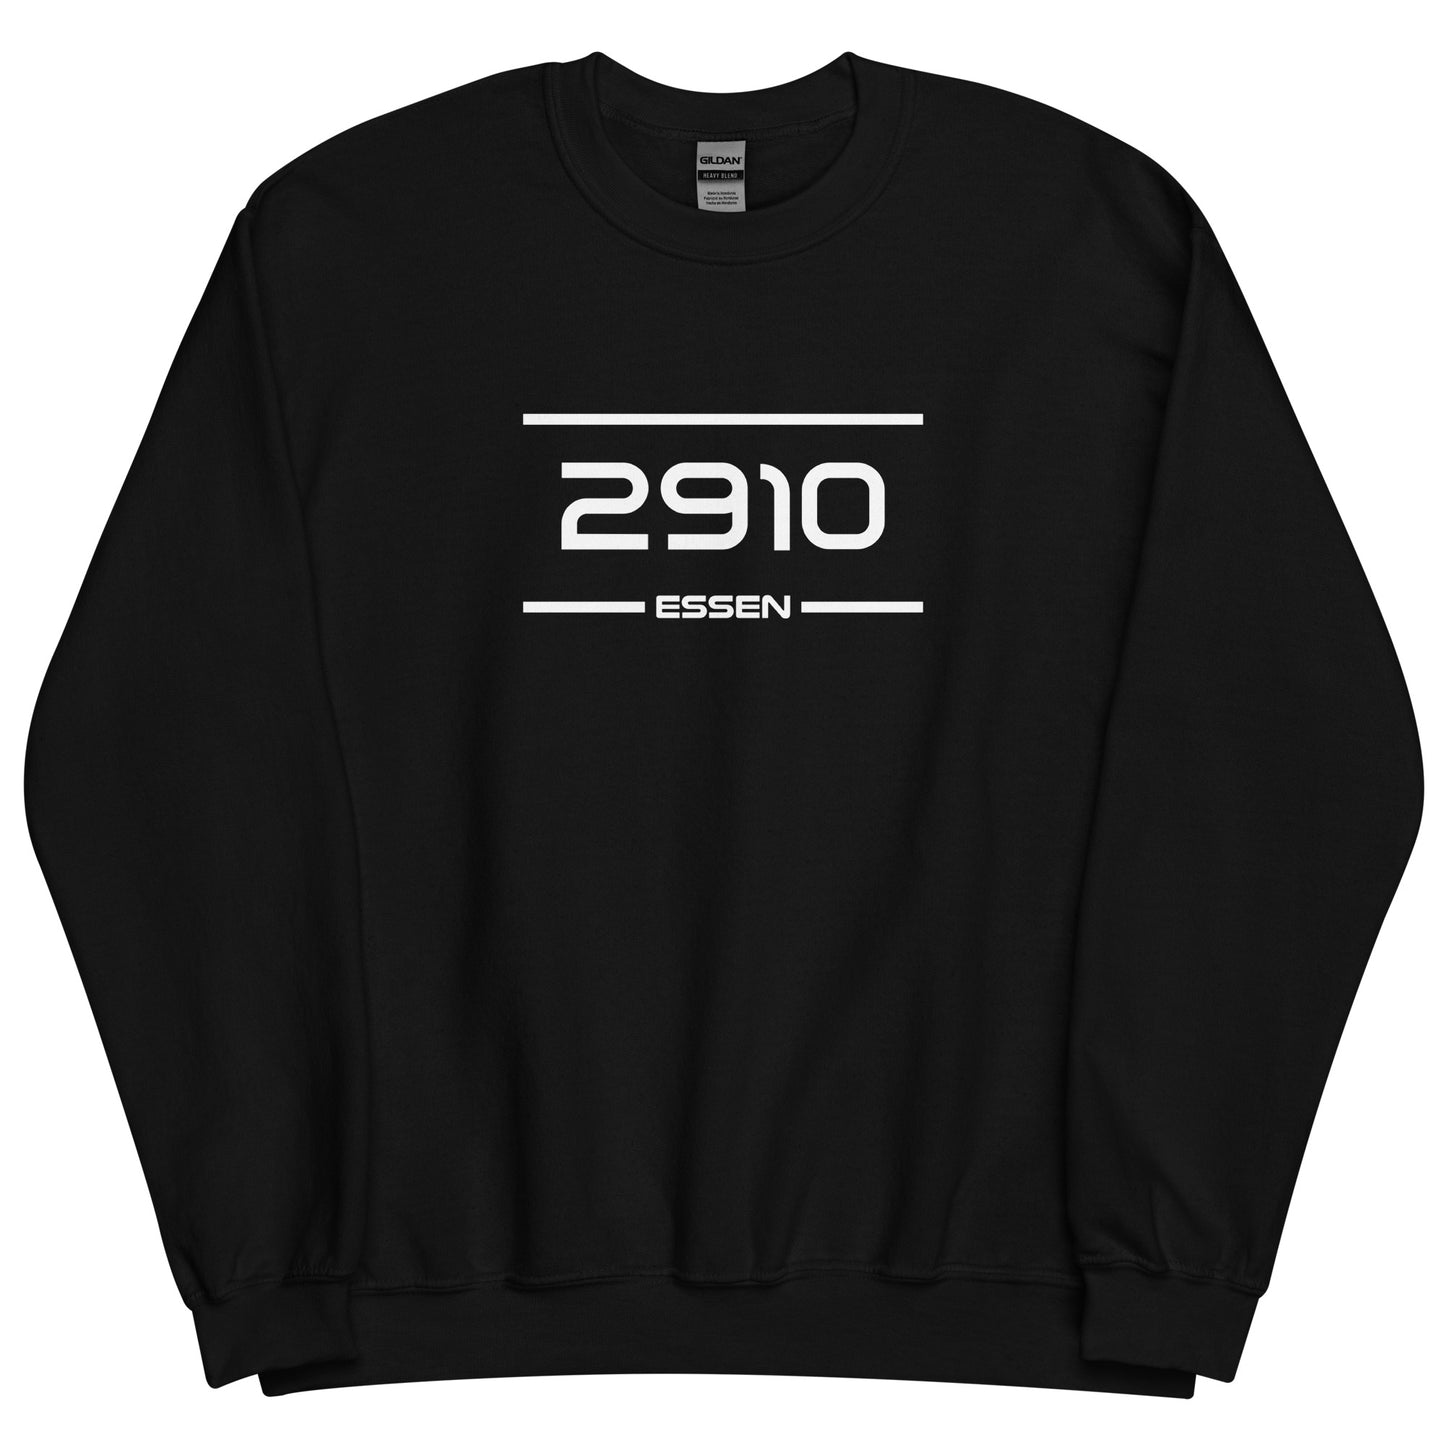 Sweater - 2910 - Essen (M/V)